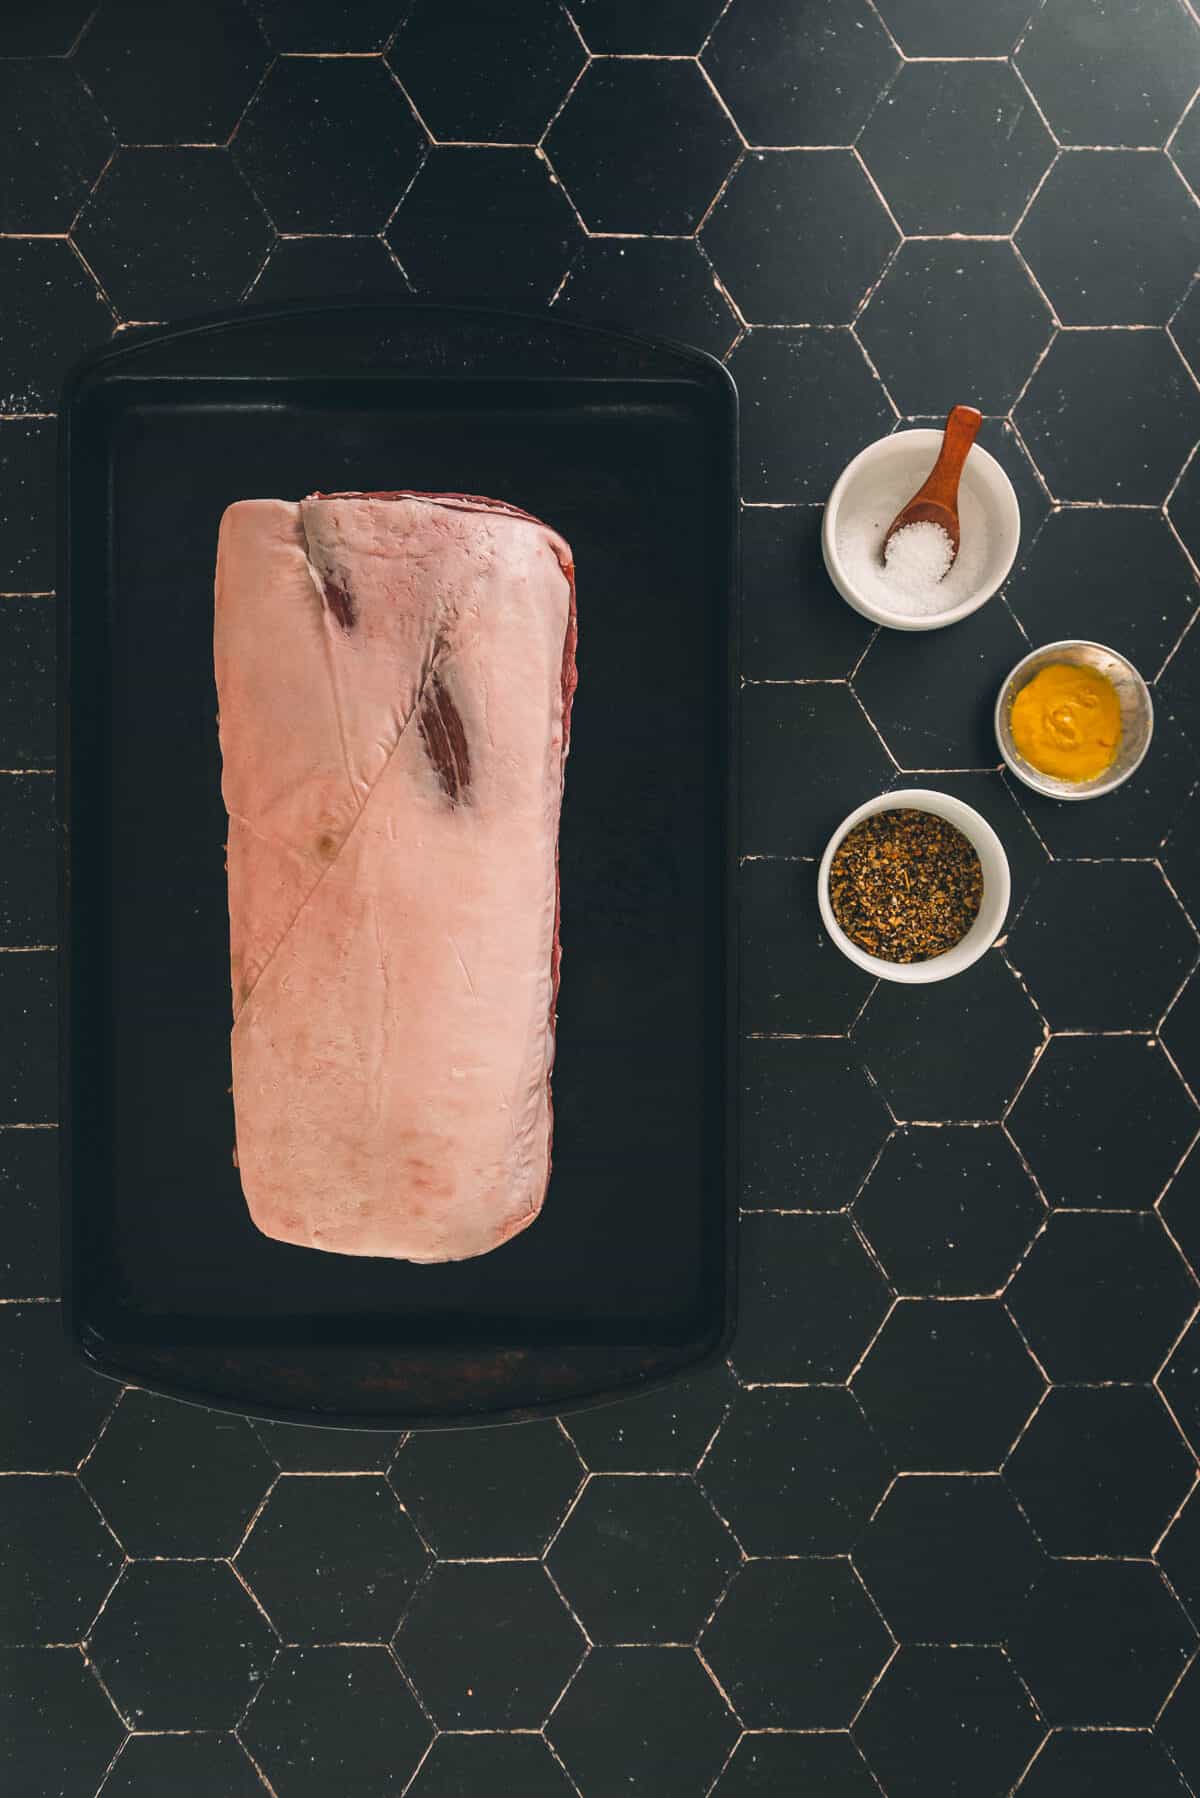 A bone-in pork roast on a tray on a black tiled table.